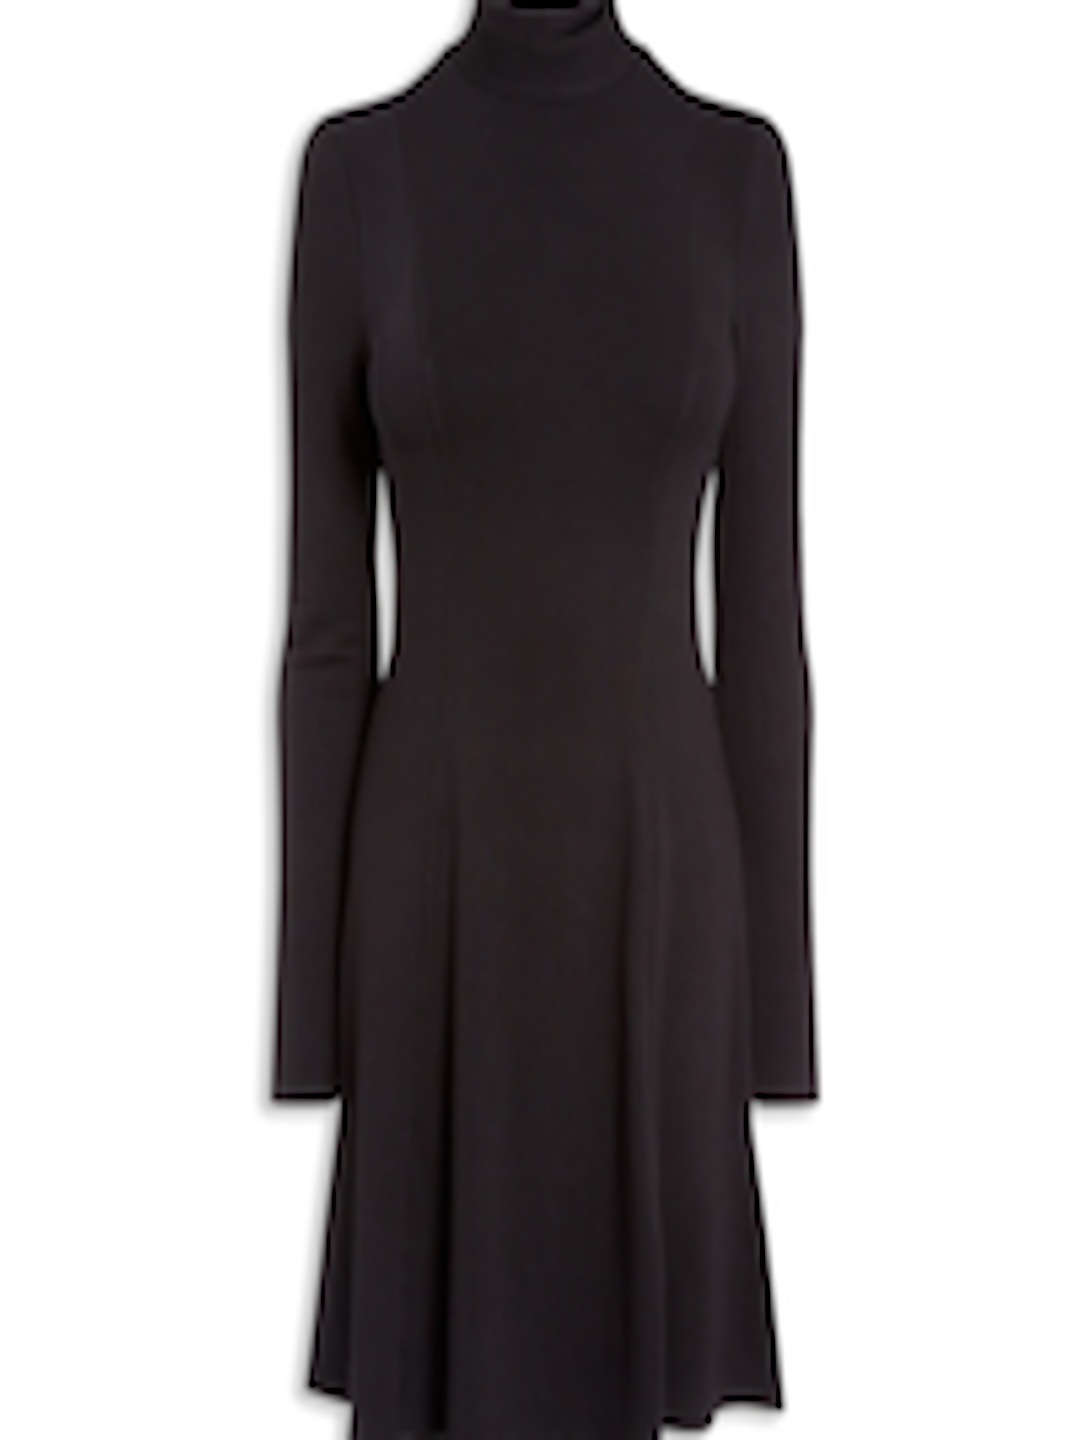 Buy Next Women Black Solid Fit & Flare Dress - Dresses for Women ...